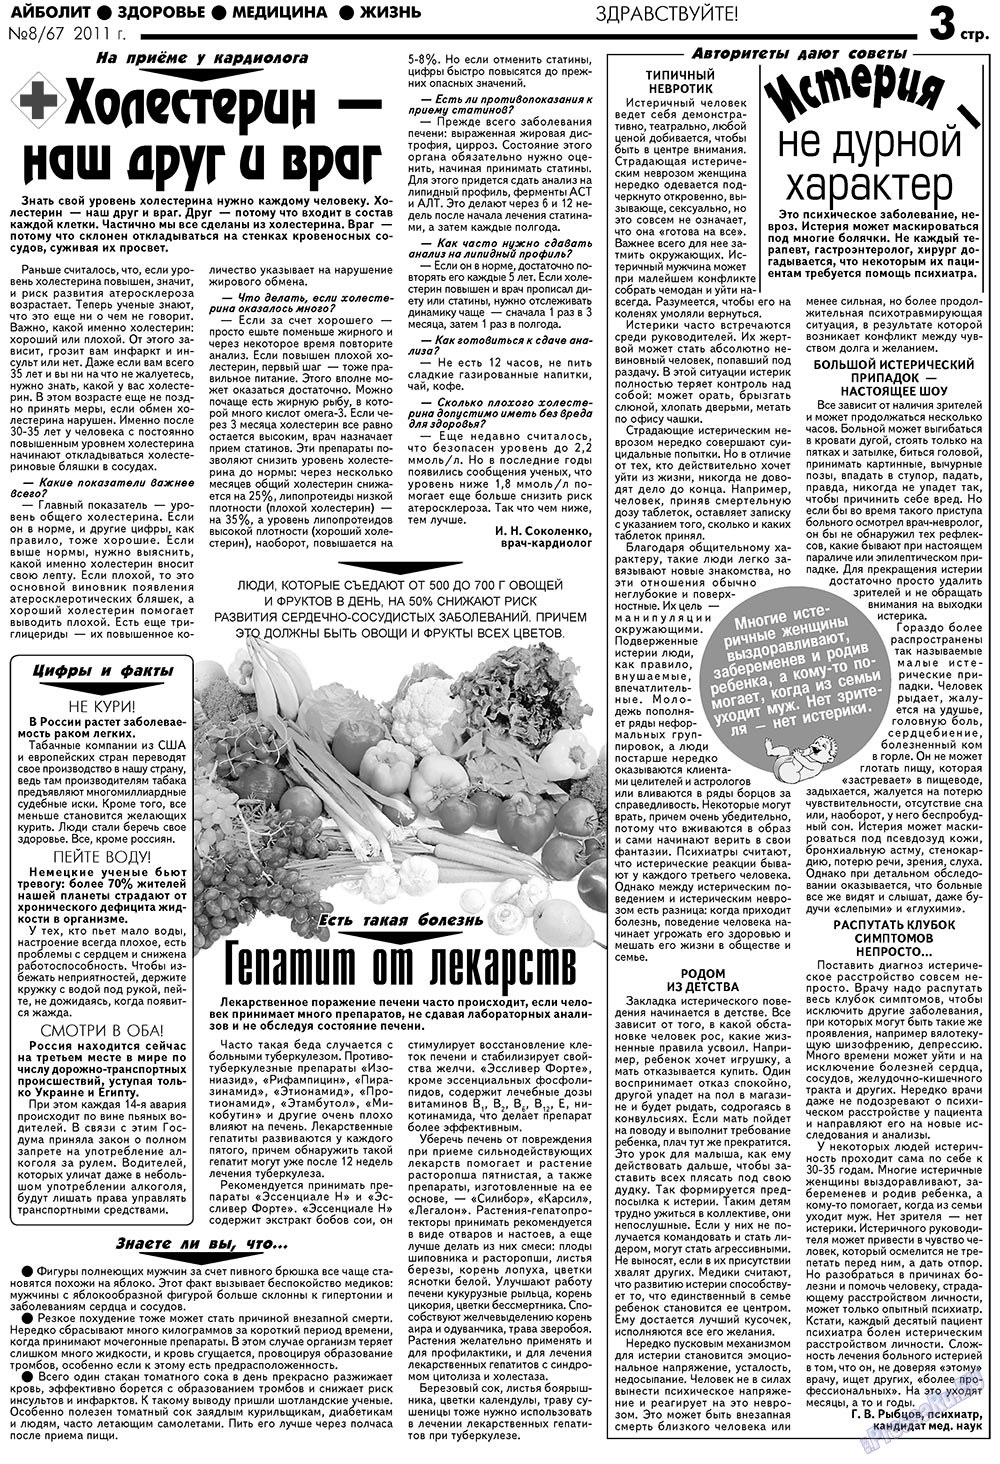 АйБолит (газета). 2011 год, номер 8, стр. 3